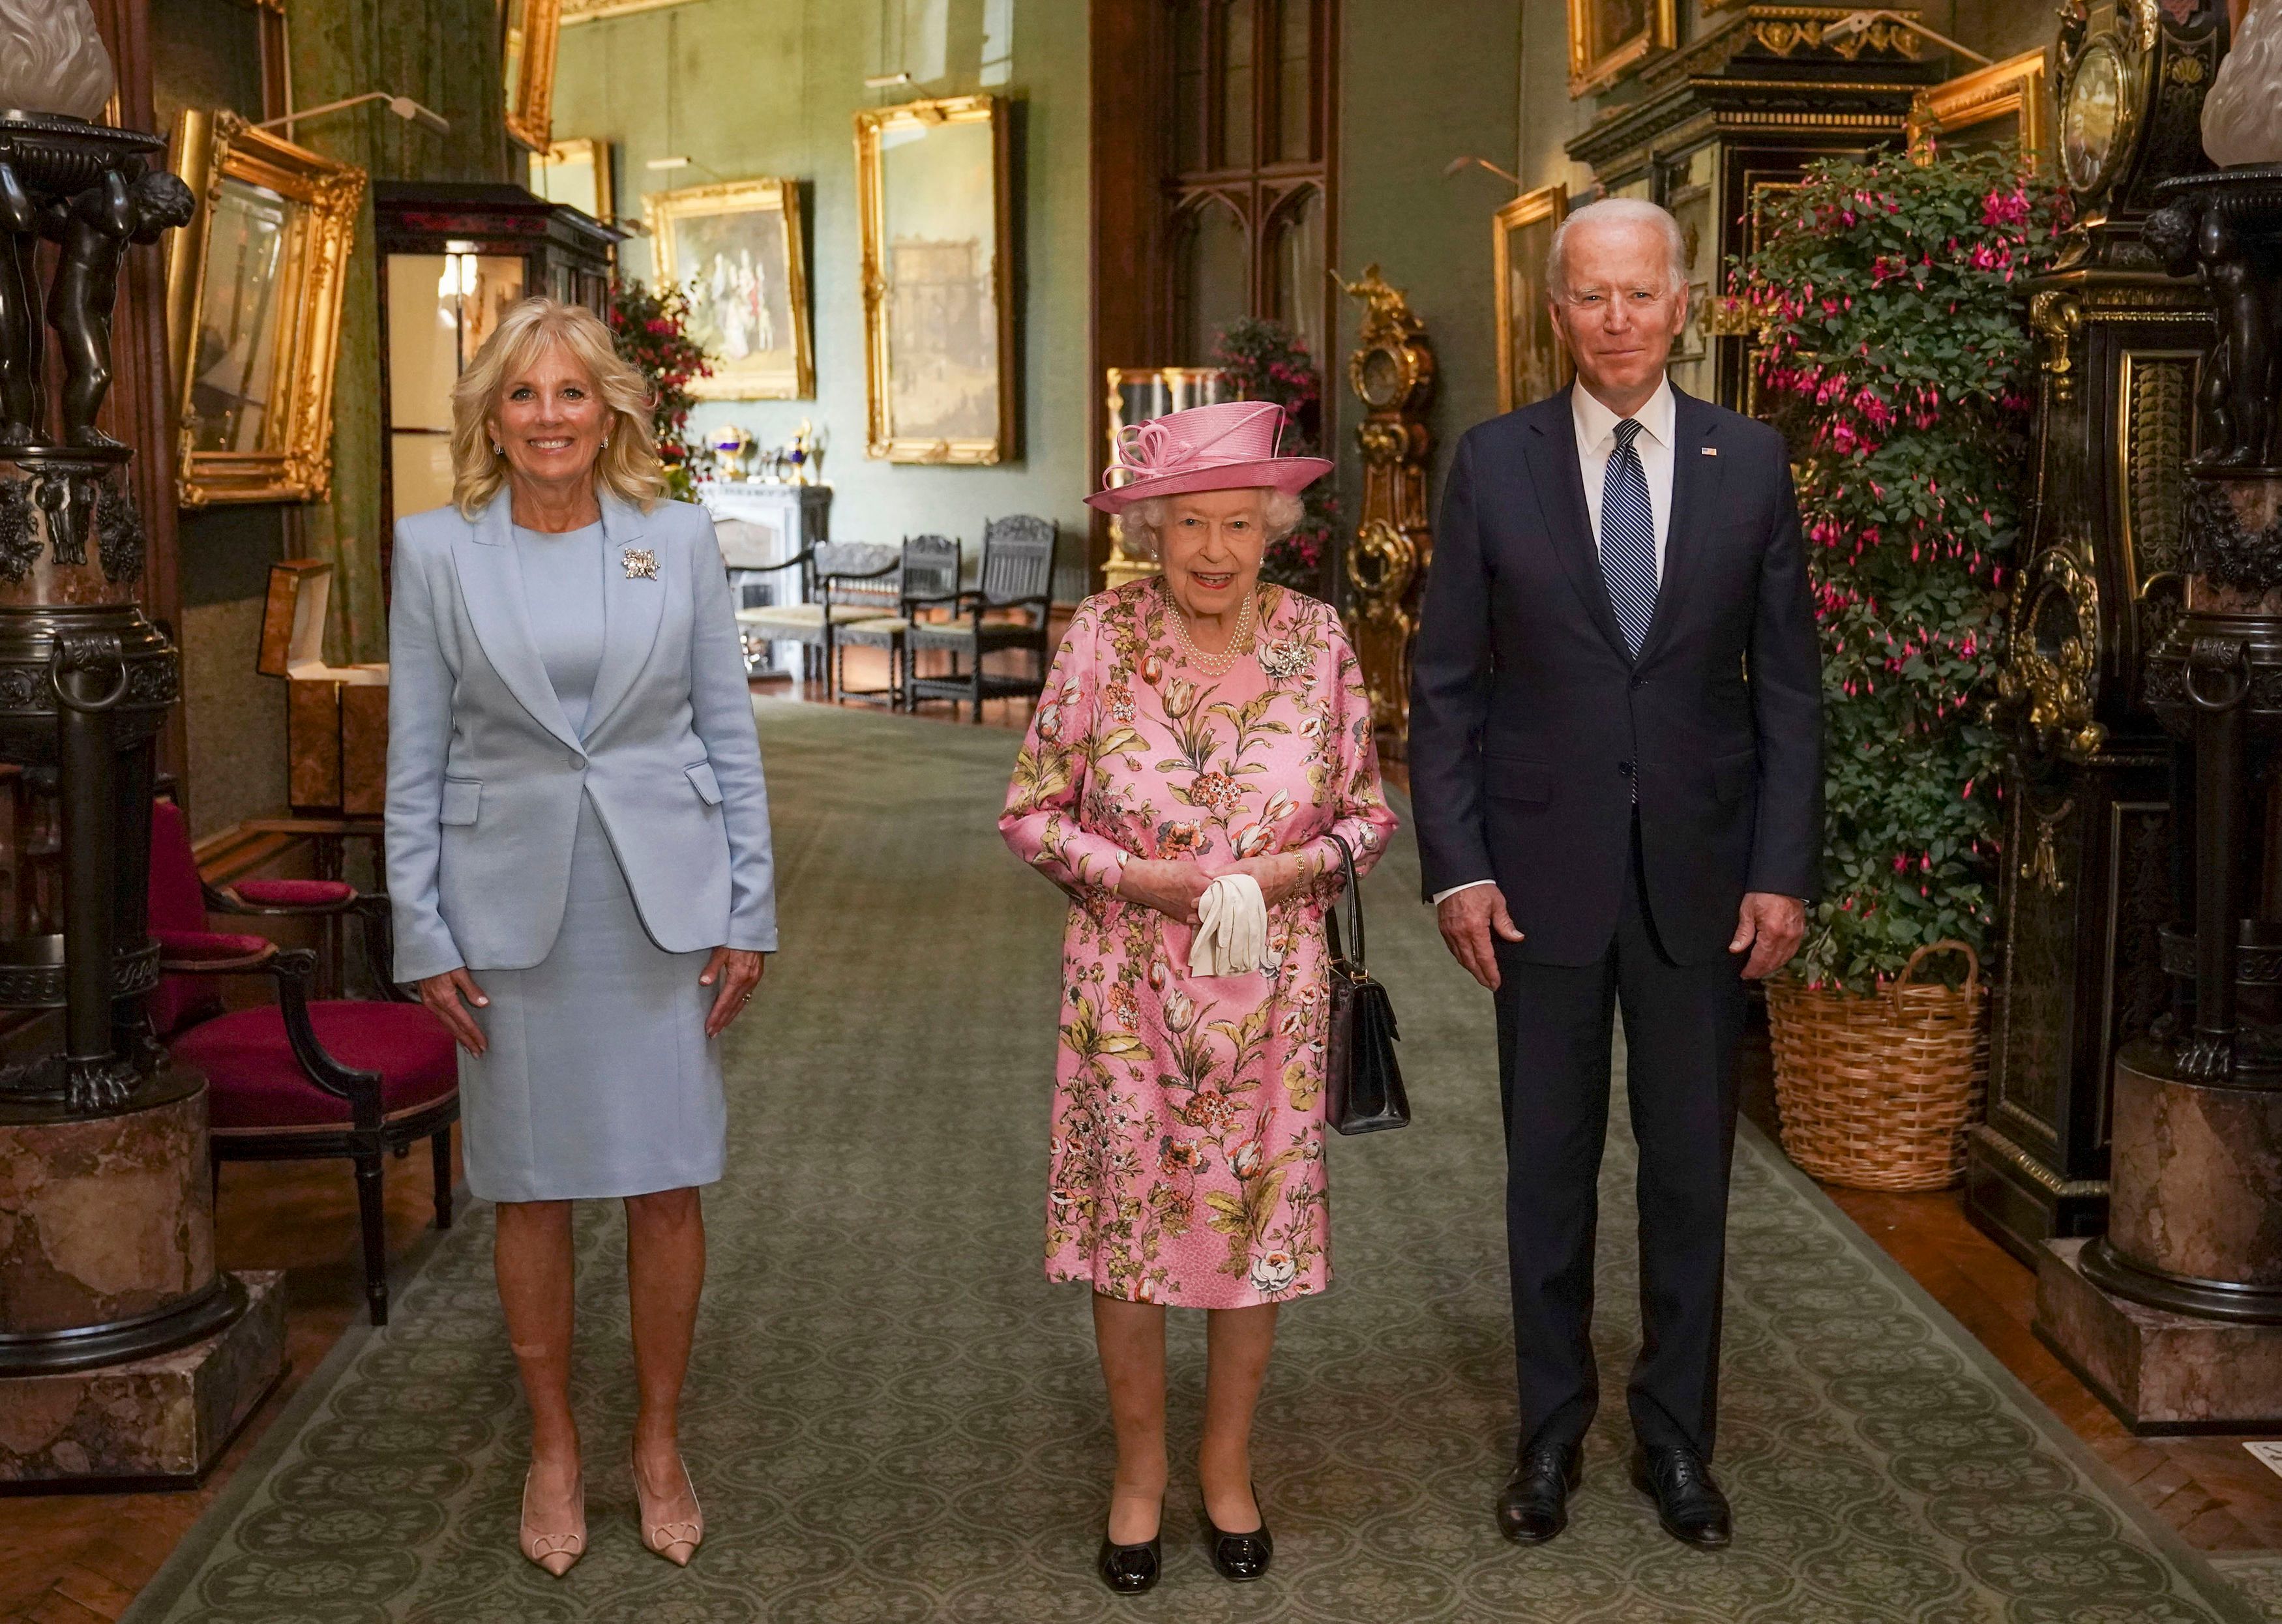 Queen Elizabeth II with U.S. President Joe Biden and his wife Jill Biden in the Grand Corridor at Windsor Castle on Sunday (Steve Parsons/Pool via AP)